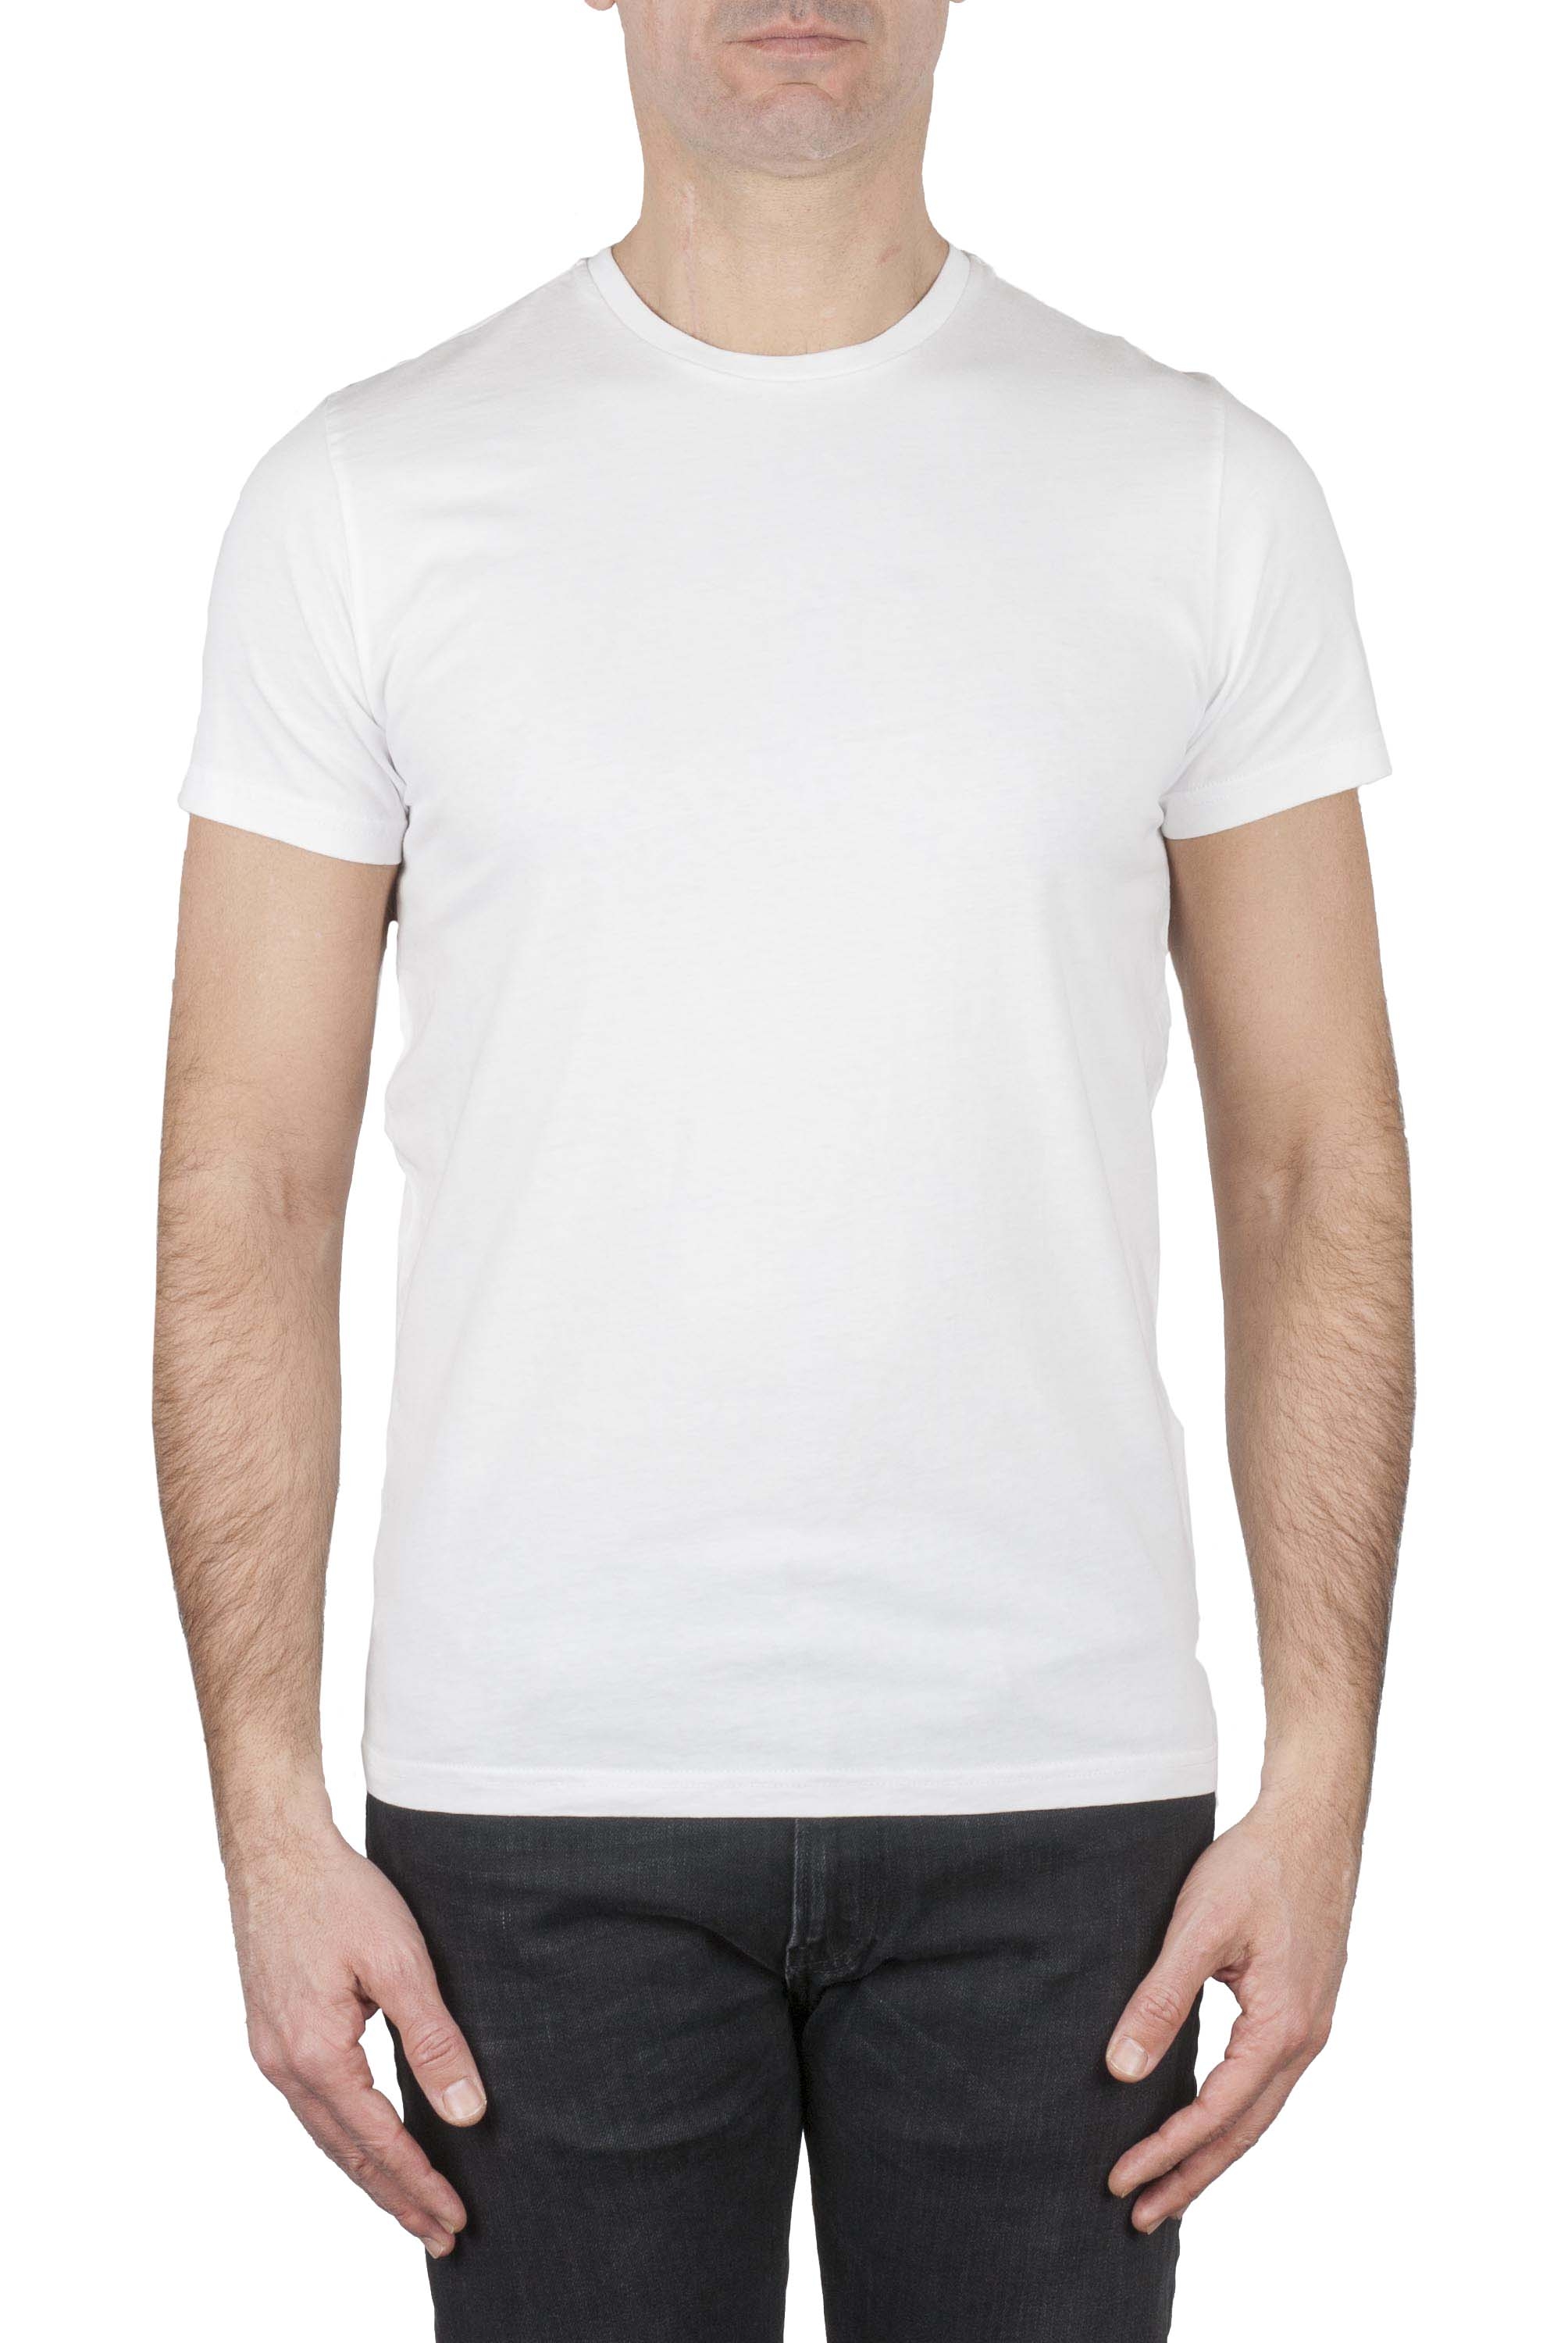 SBU 03148_2020AW Classic short sleeve cotton round neck t-shirt white 01